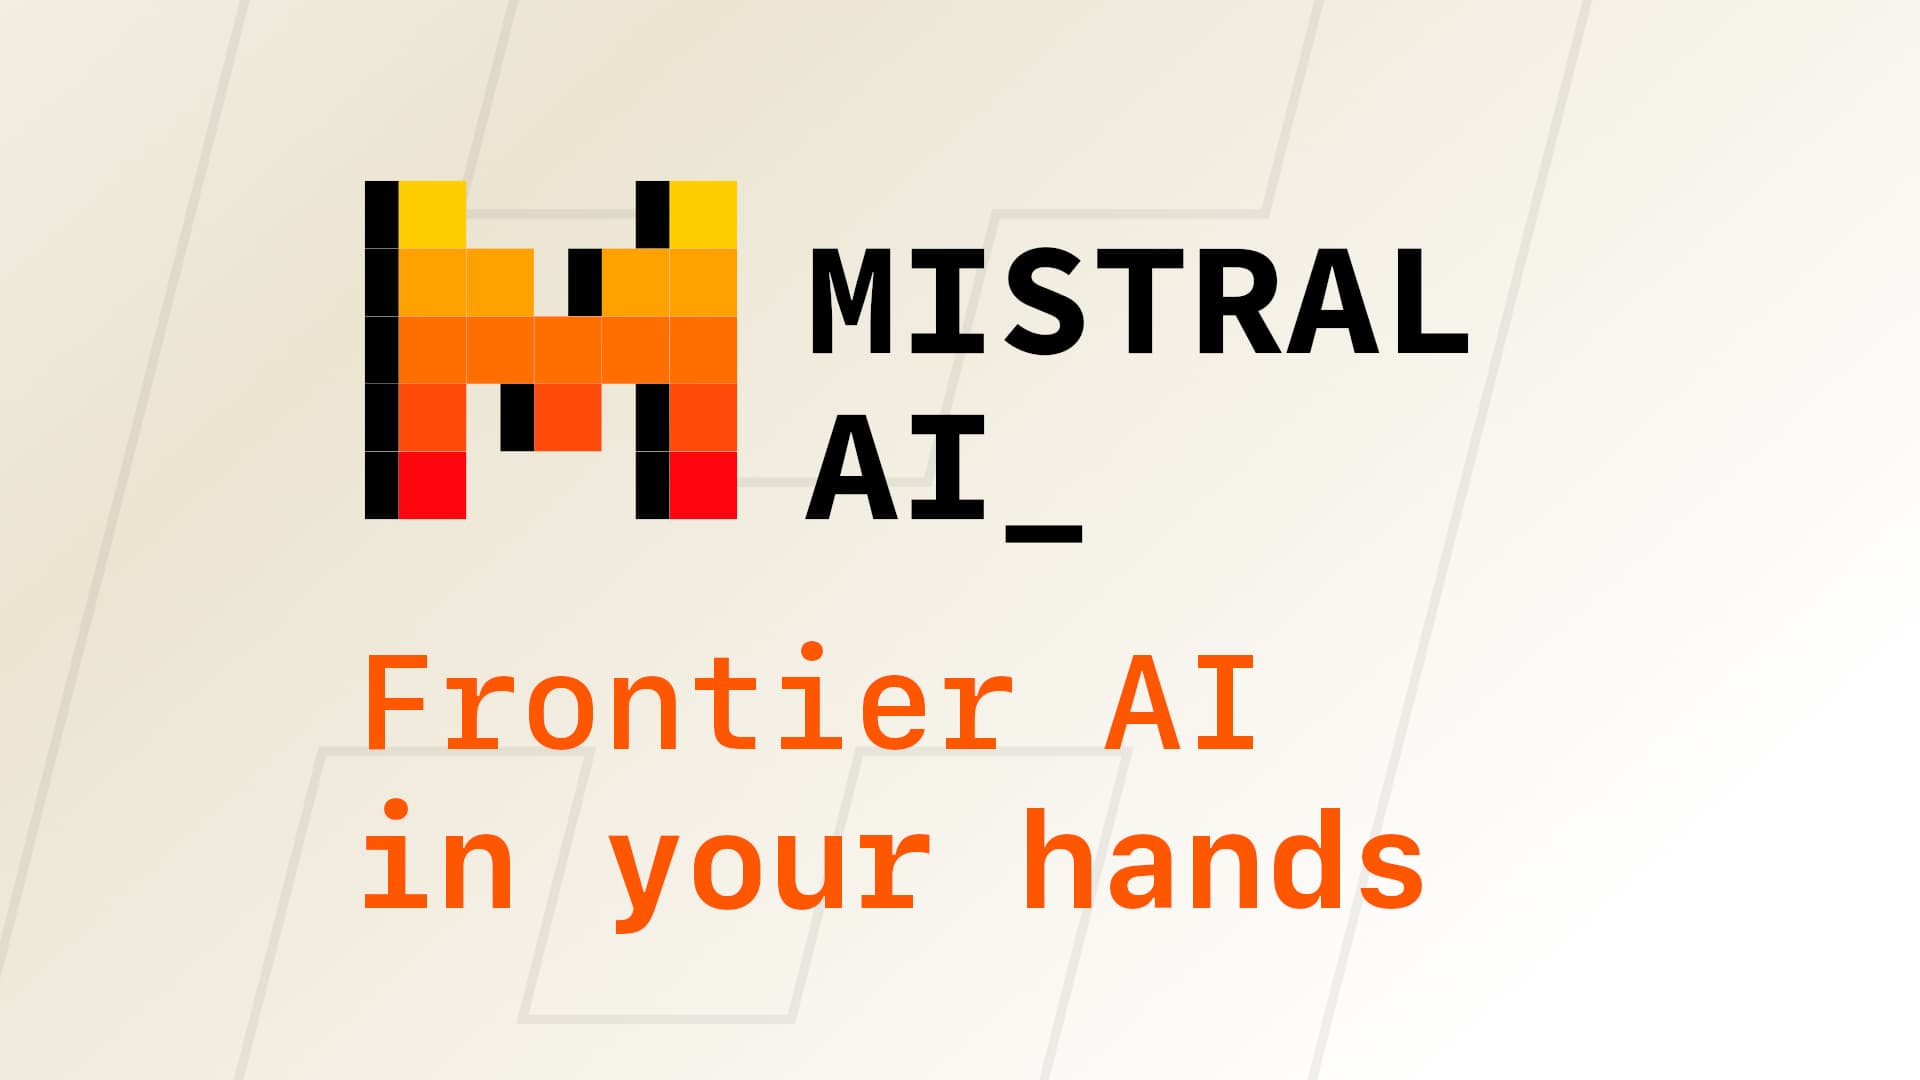 Французский ИИ-стартап Mistral AI привлек 385 млн евро